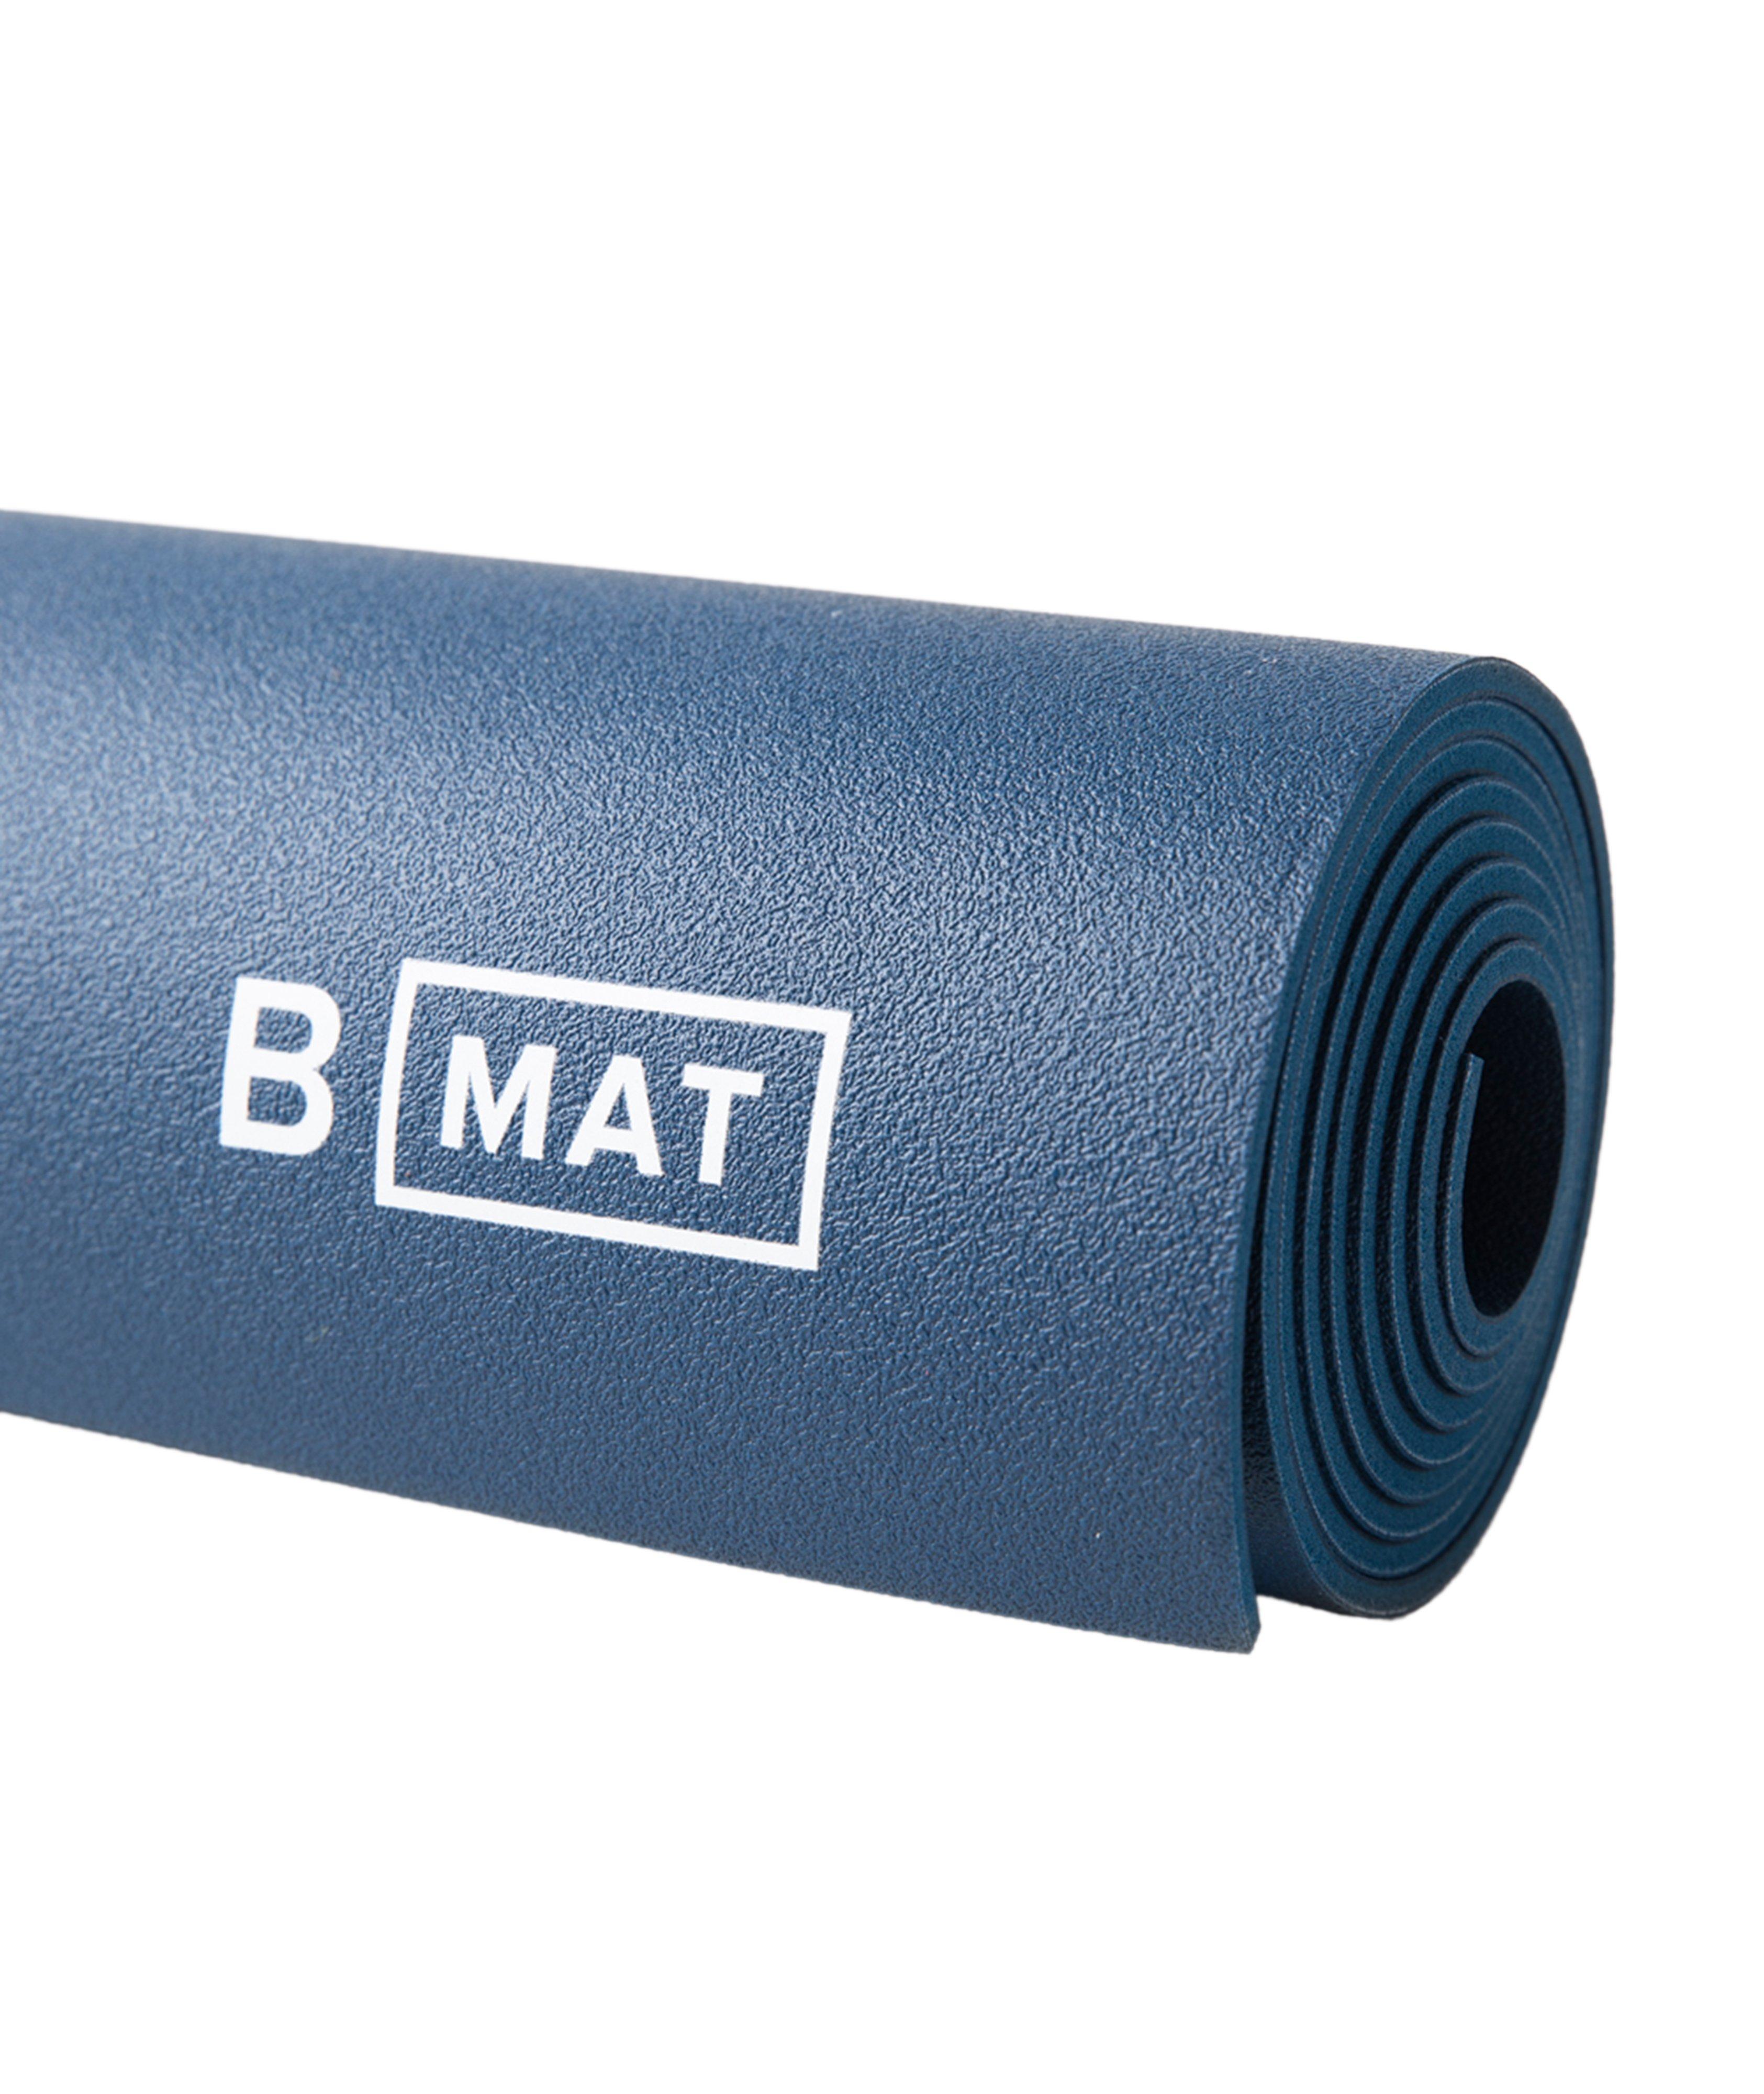 Tapis de yoga B MAT (4 mm) image 0